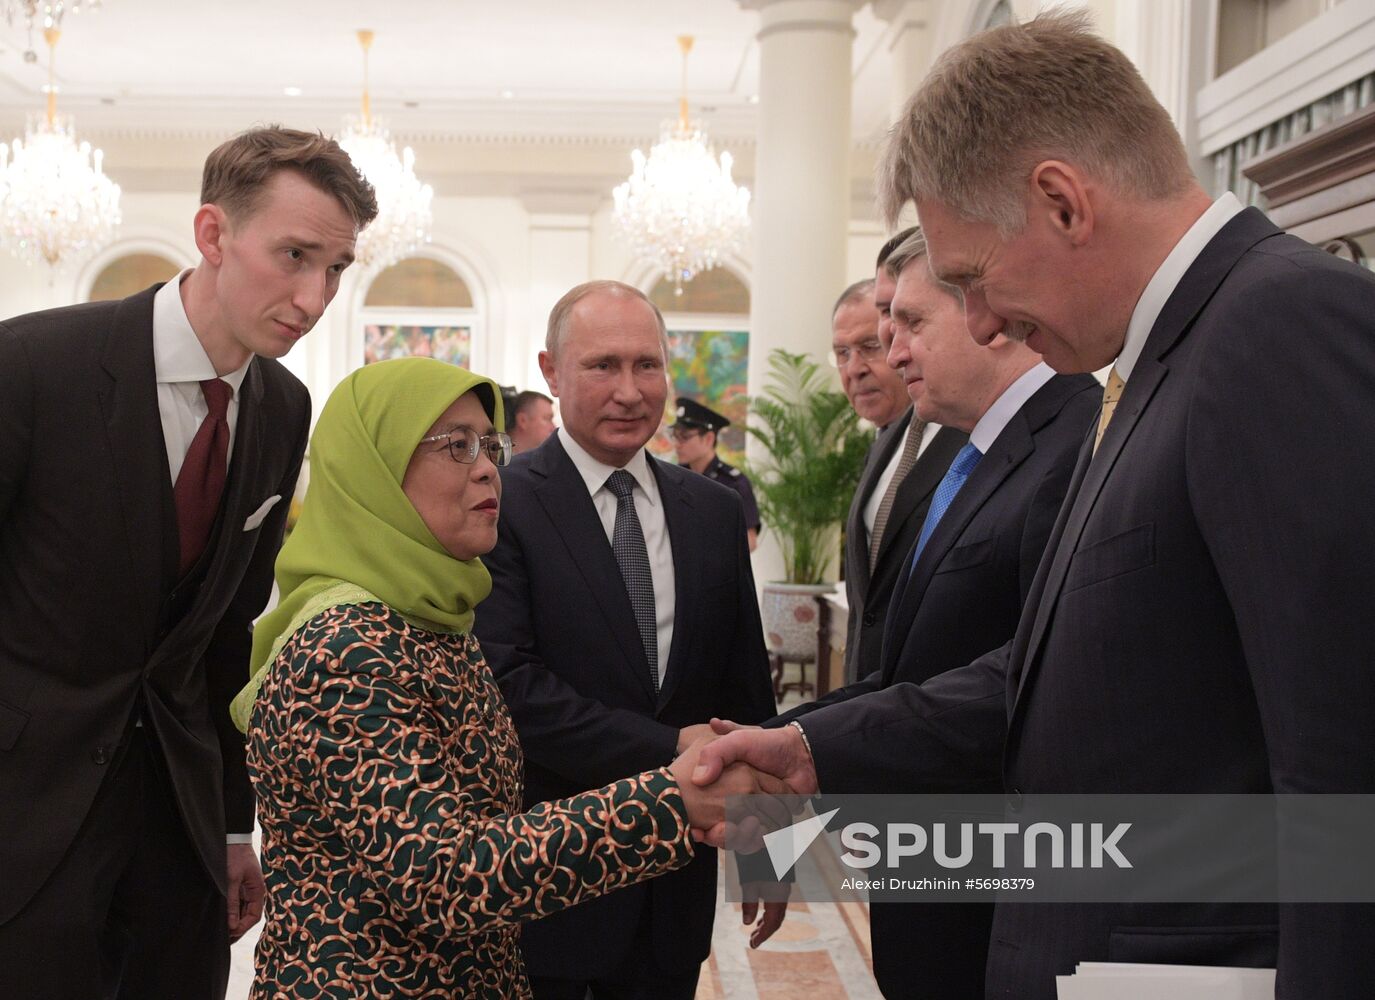 President Vladimir Putin's visit to Singapore